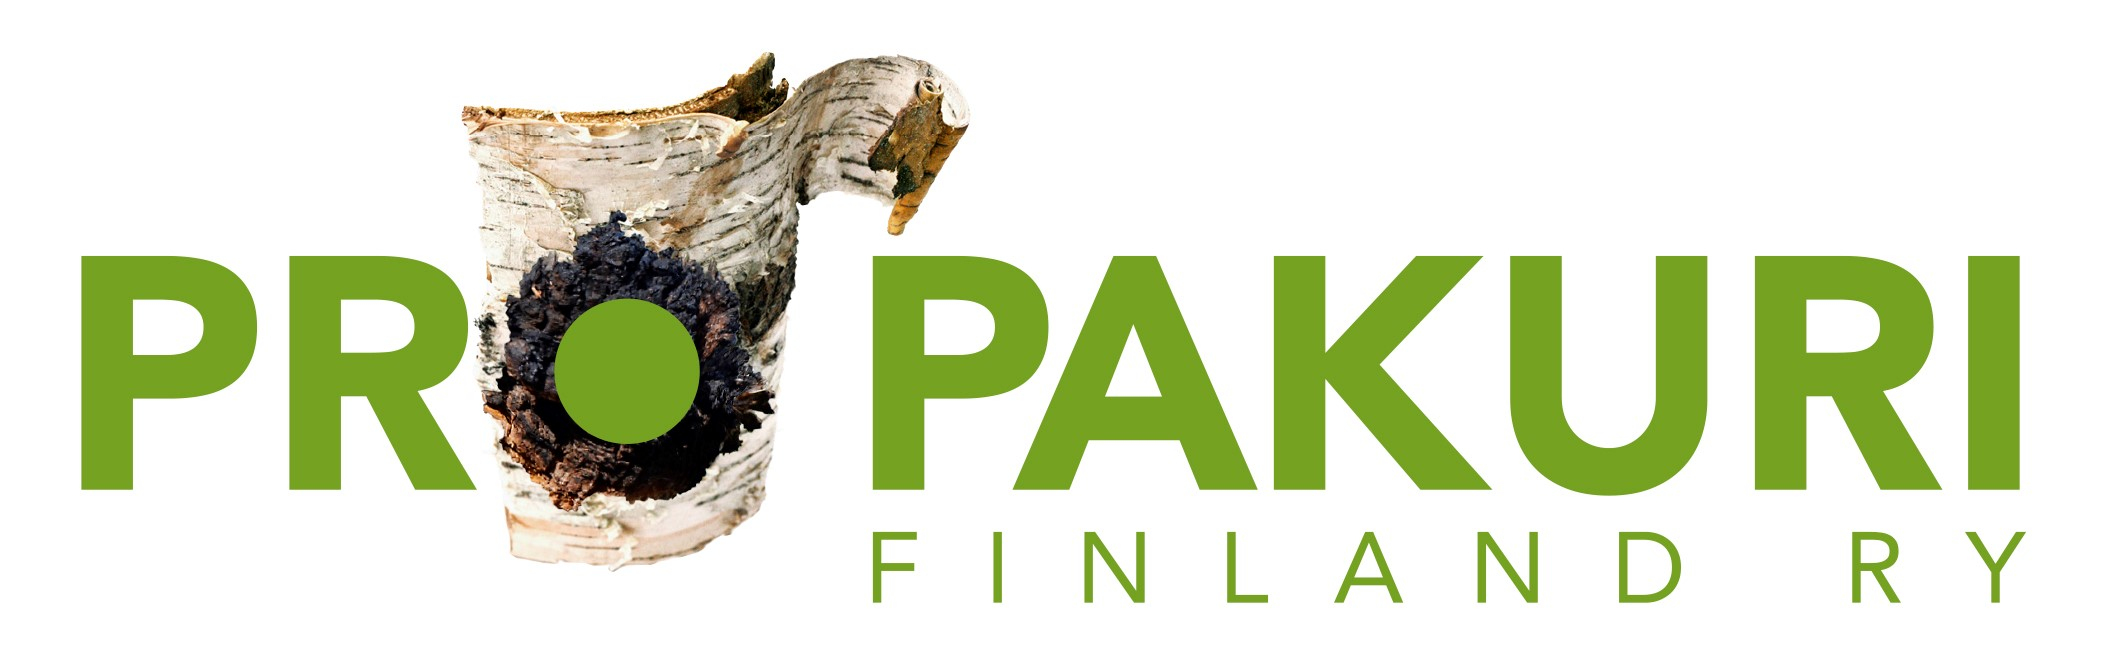 Pro Pakuri Logo 1.jpg